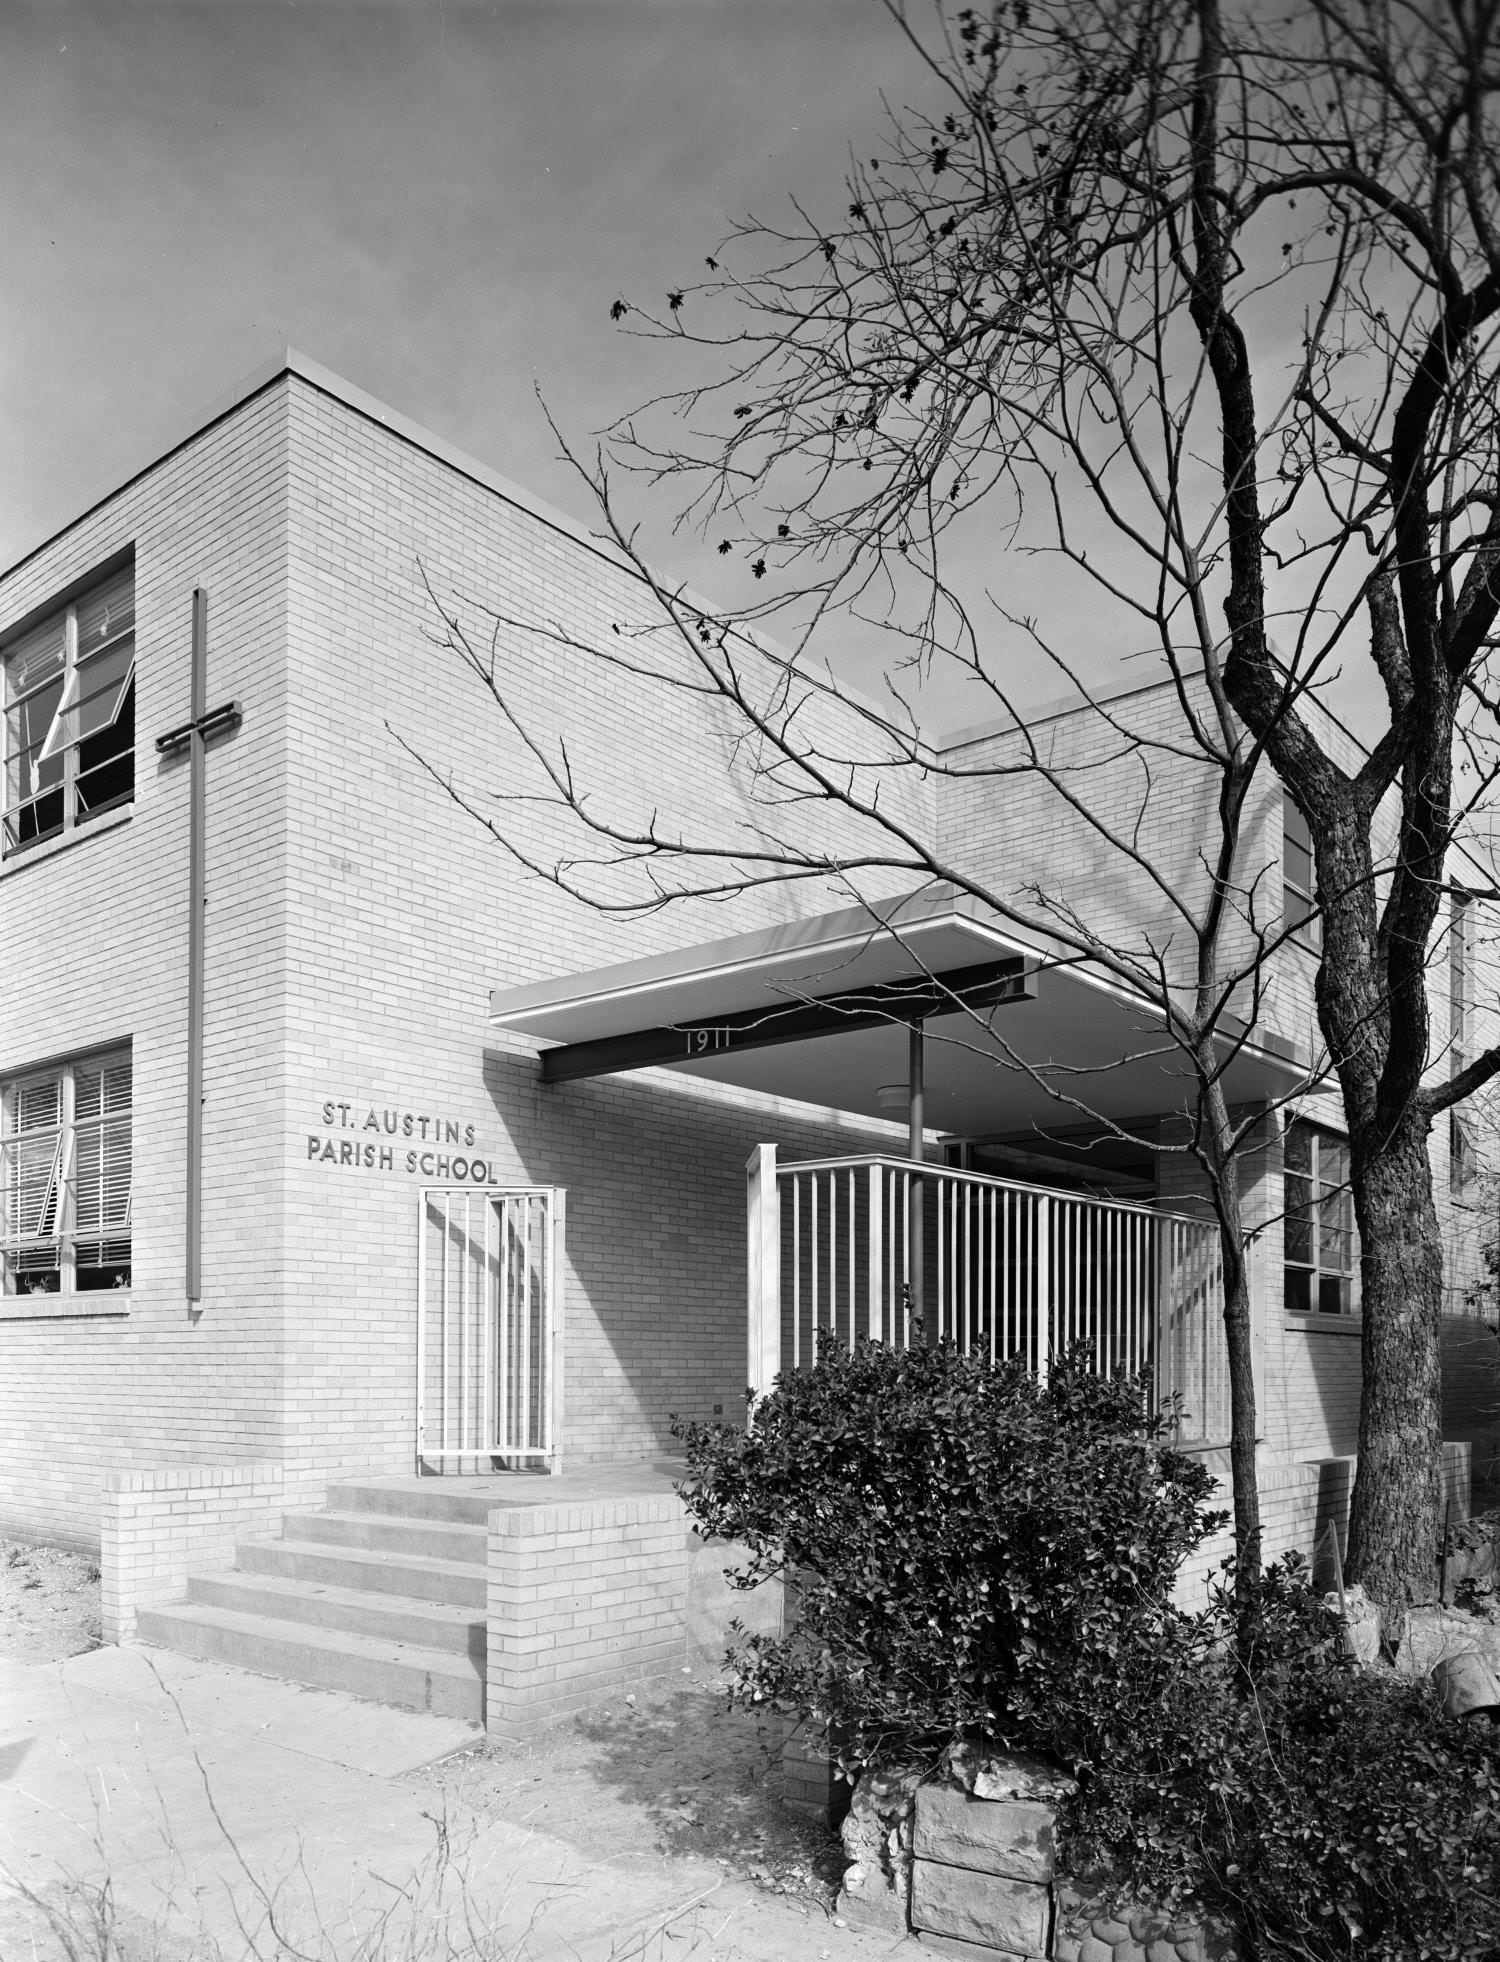 The porch and entrance to St Austin's Parish School, now St. Austin Catholic School, at 1911 San Antonio St., Austin, 1955